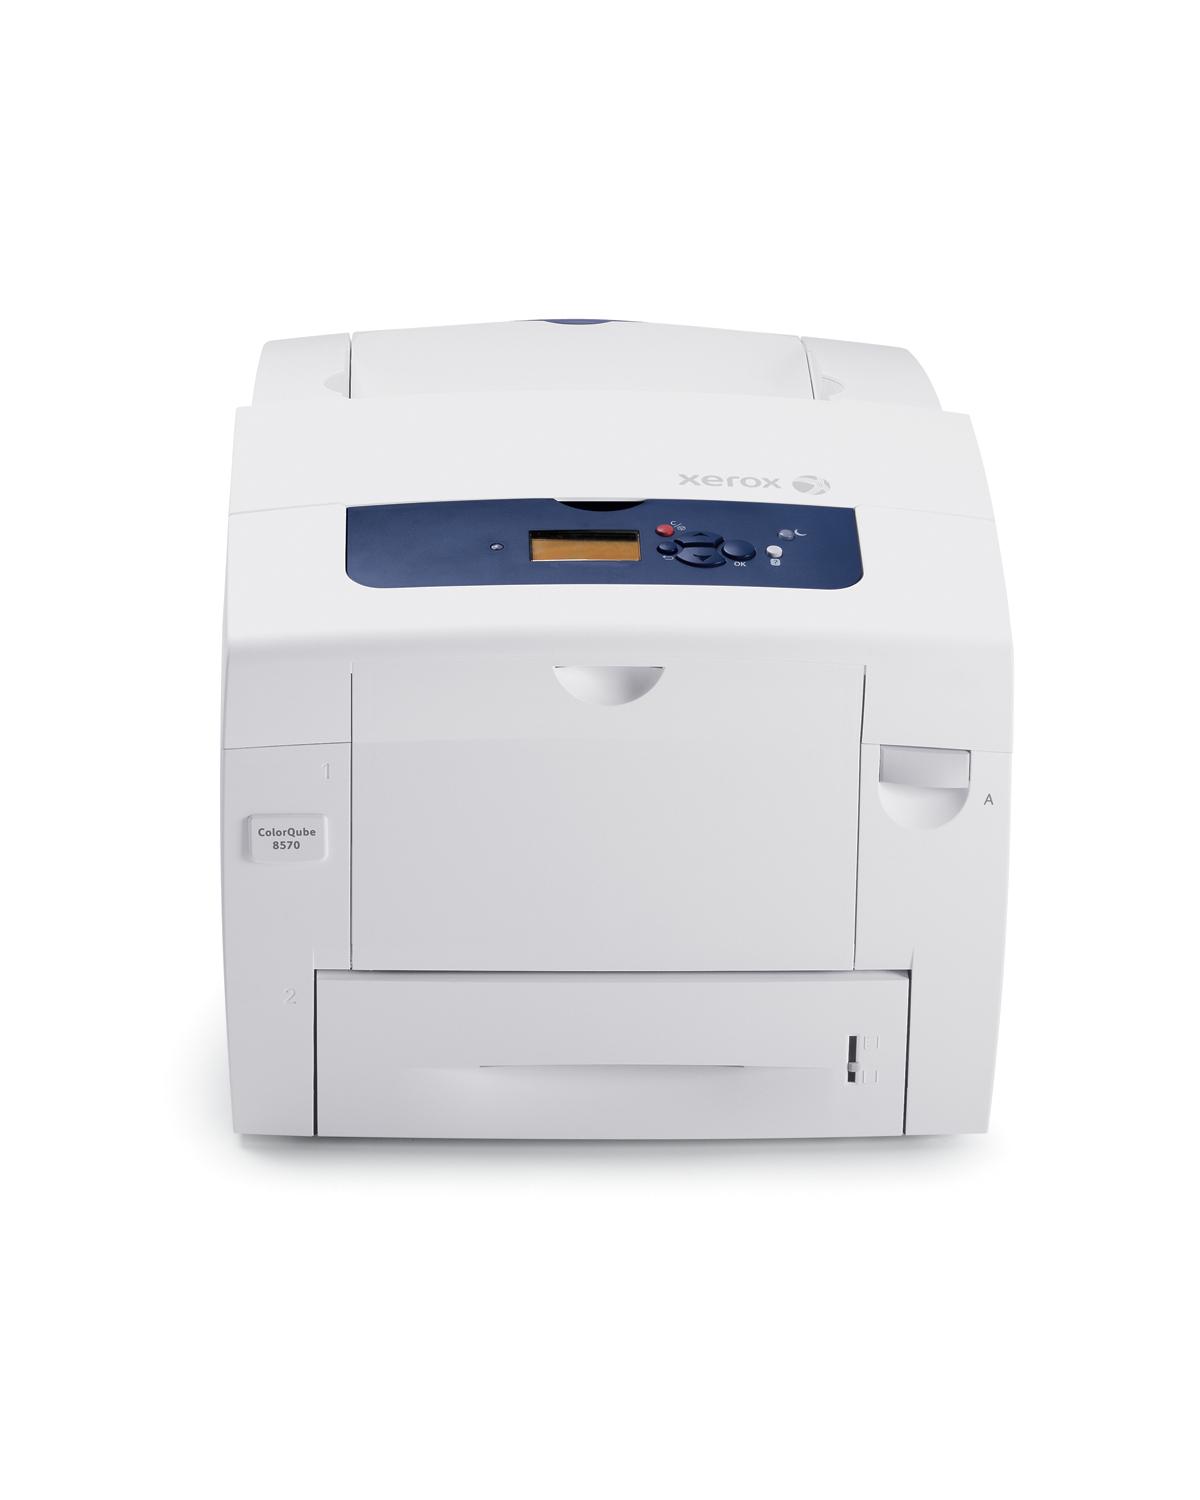 Foto Xerox phaser 8570adn, impresora, color, a4, 40 ppm, 1024 mhz, 2